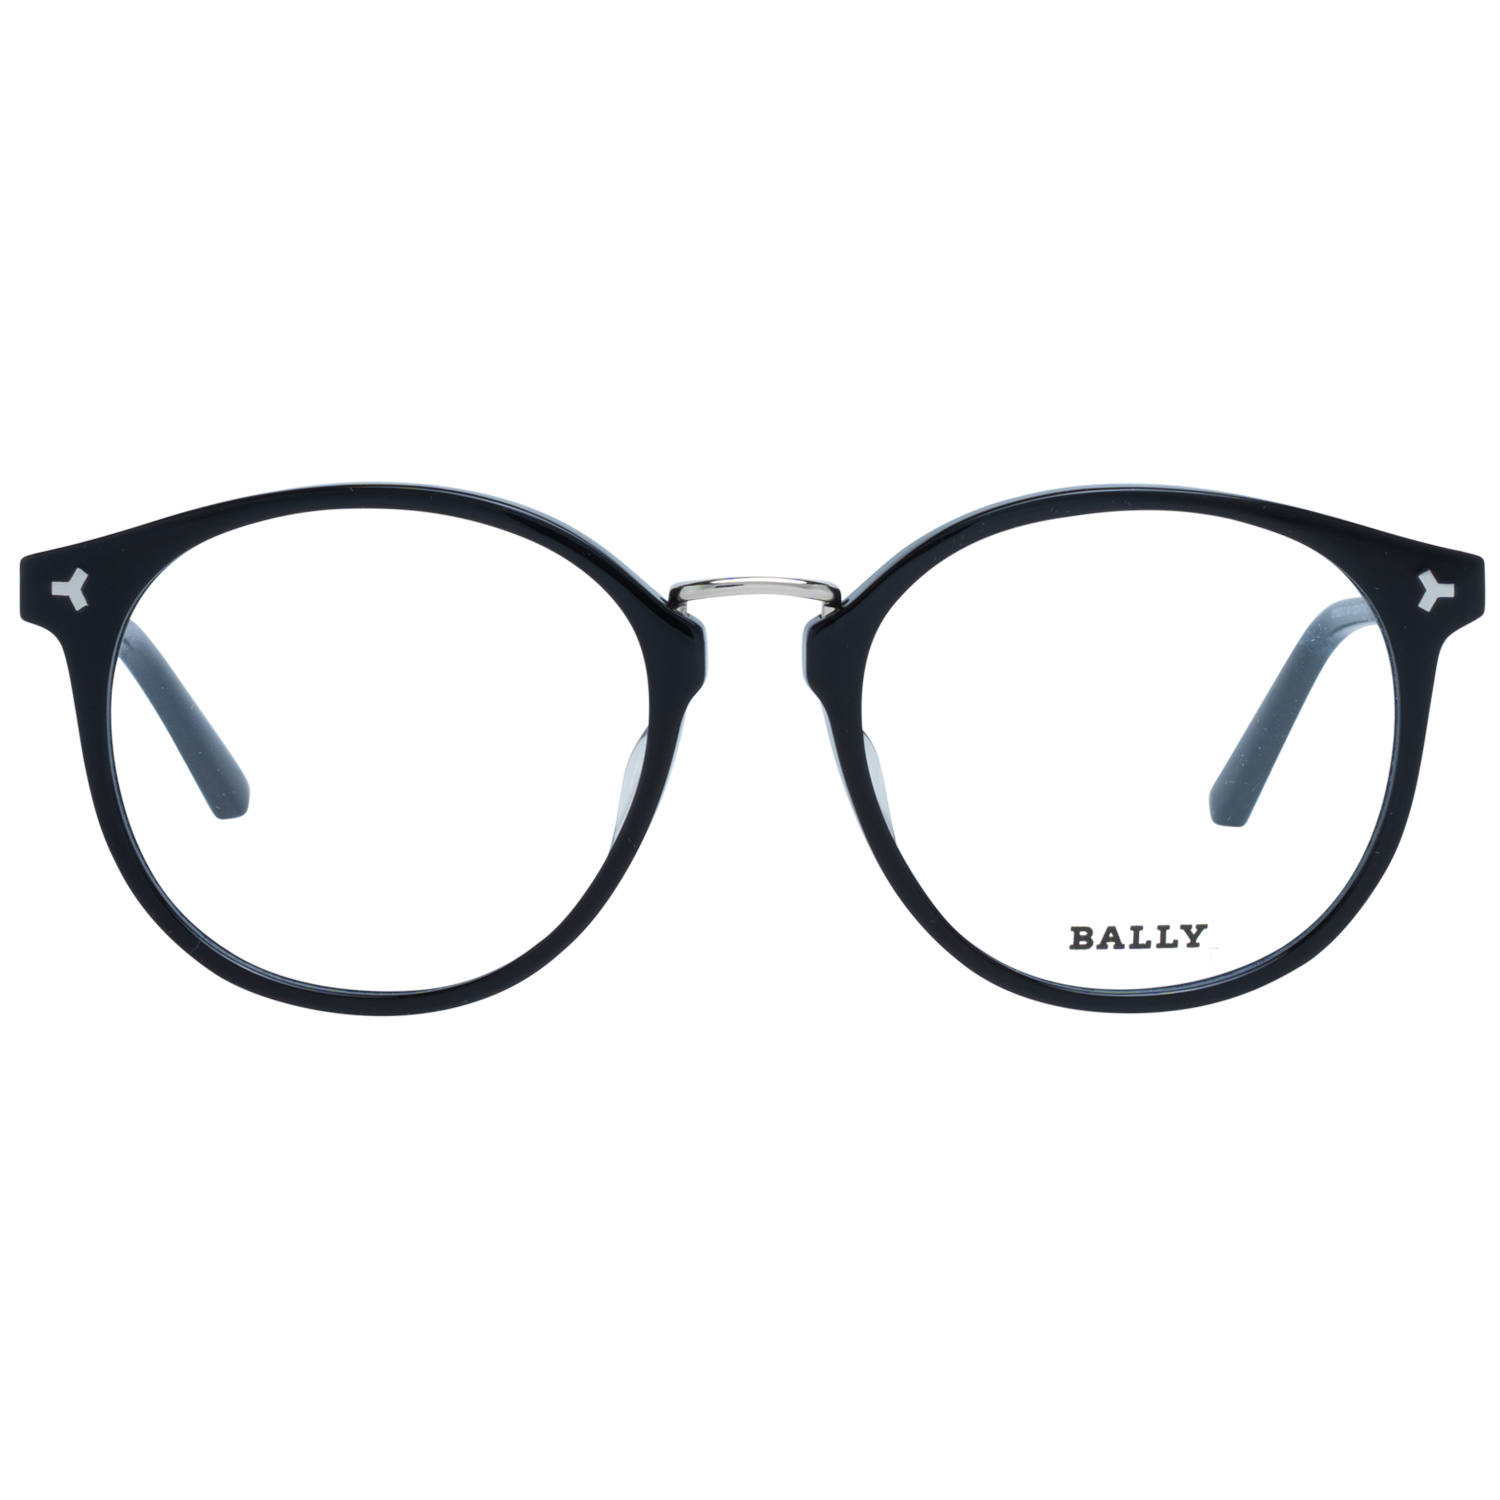 Bally Optical Frame Bally Eyeglasses Frames BY5025-D 001 52 Eyeglasses Eyewear UK USA Australia 